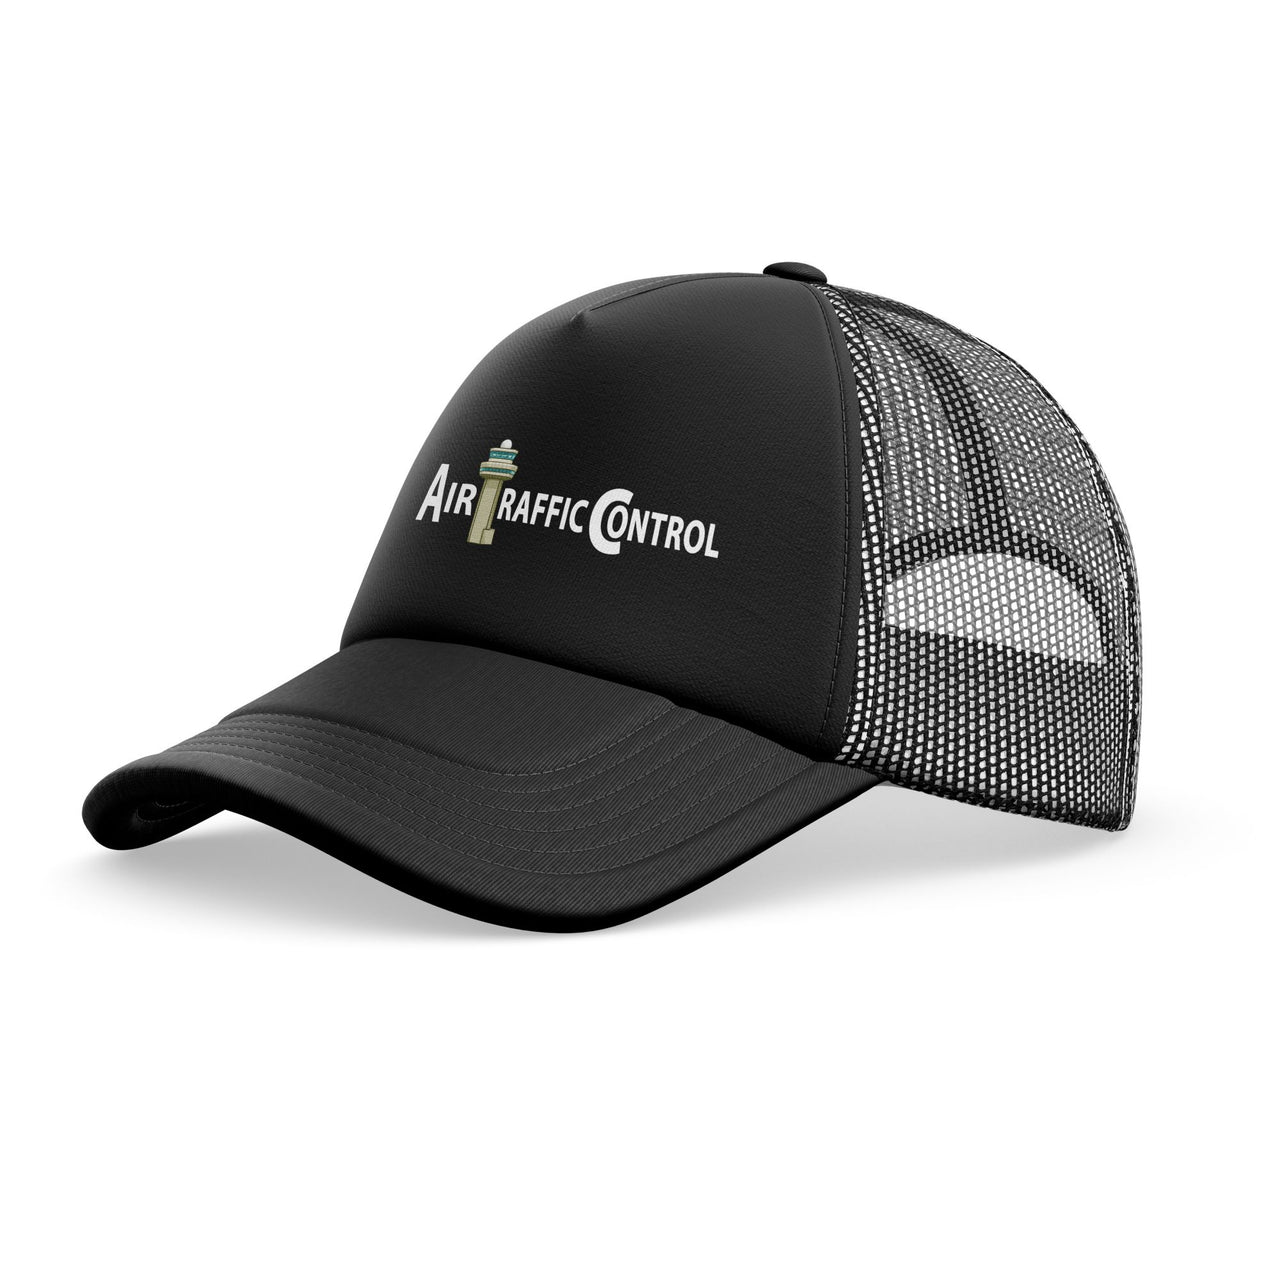 Air Traffic Control Designed Trucker Caps & Hats